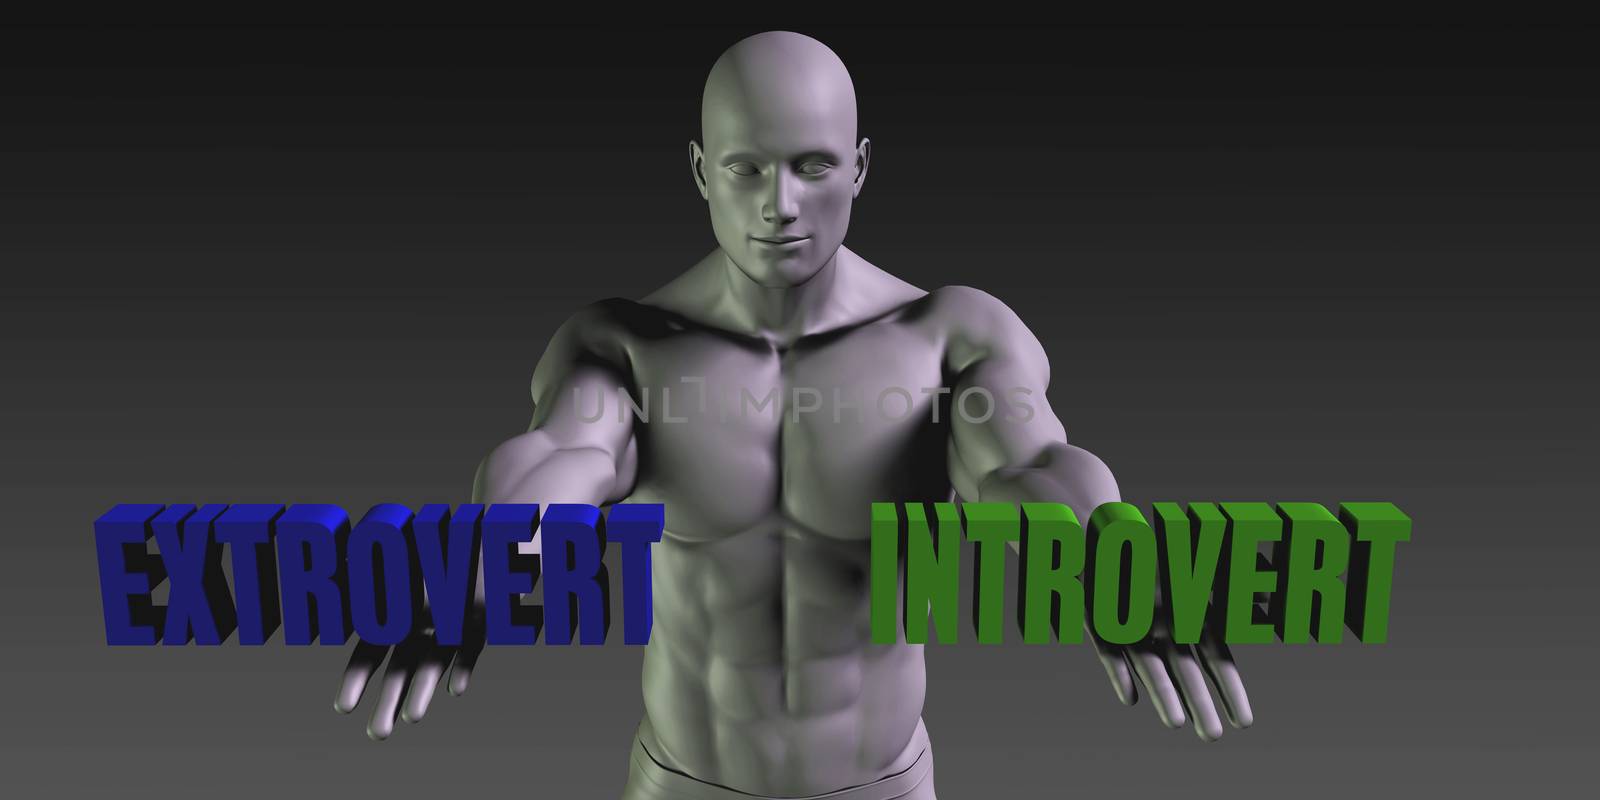 Extrovert vs Introvert by kentoh